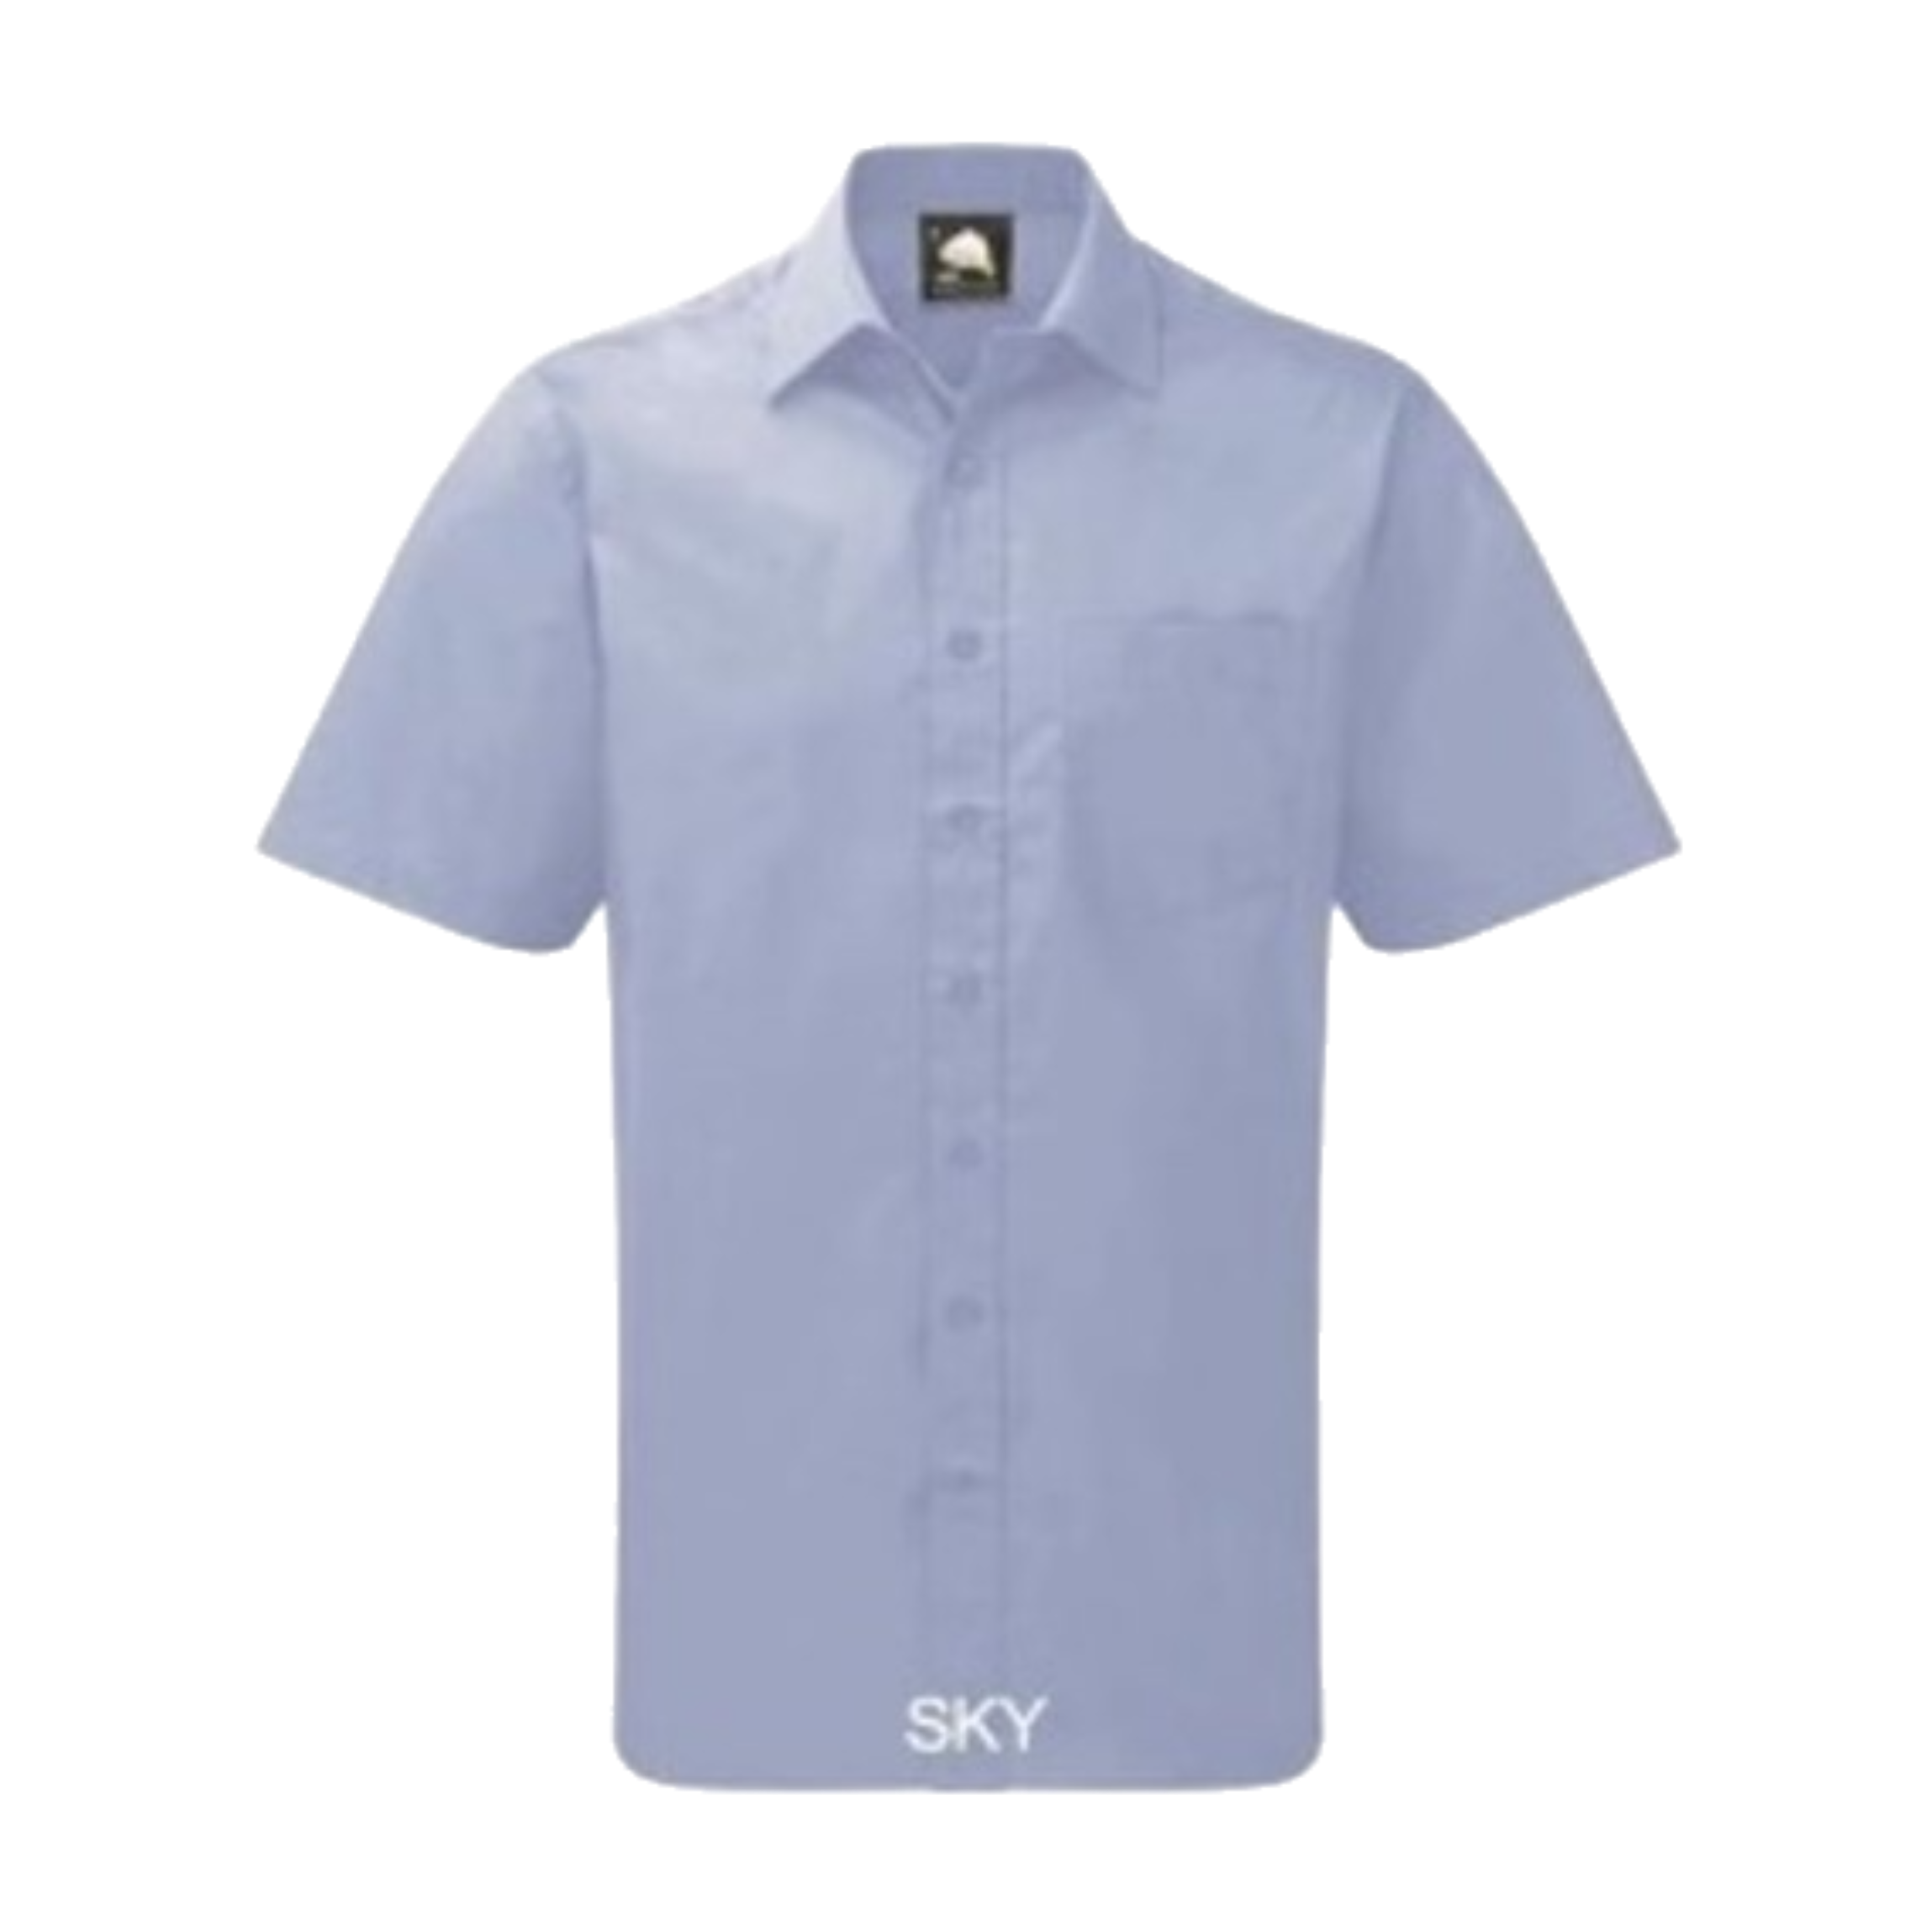 Orn Premium Oxford Short Sleeve Shirt - Sky Blue - 14.5in - TJ Hughes